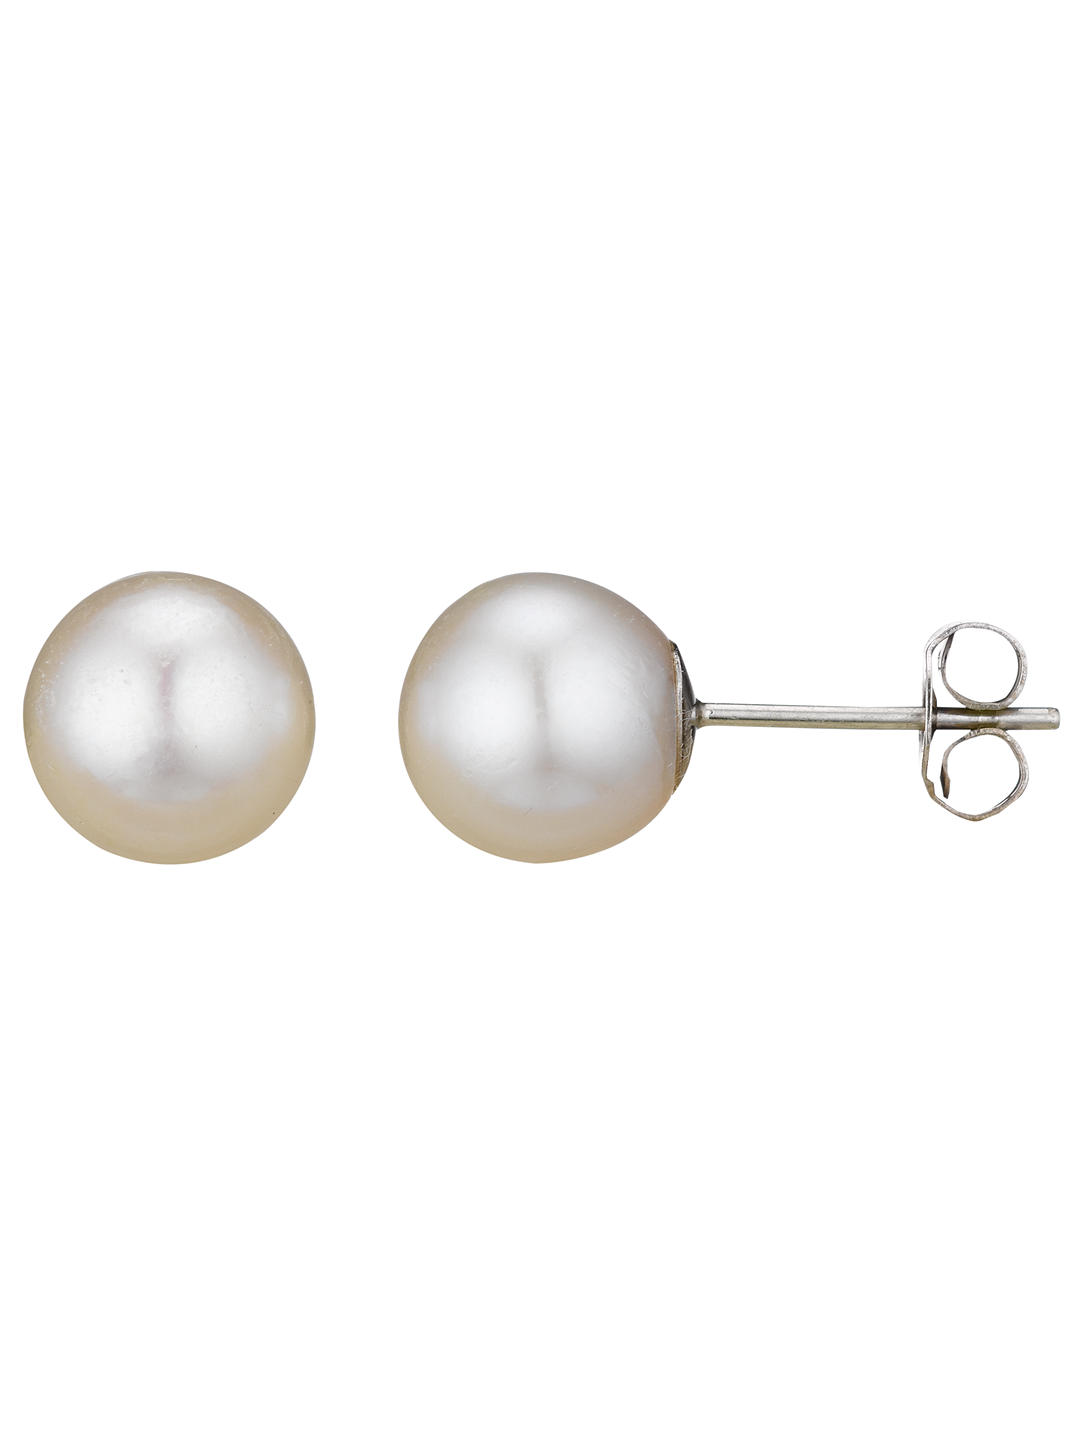 A B Davis 18ct White Gold Round Pearl Stud Earrings, White